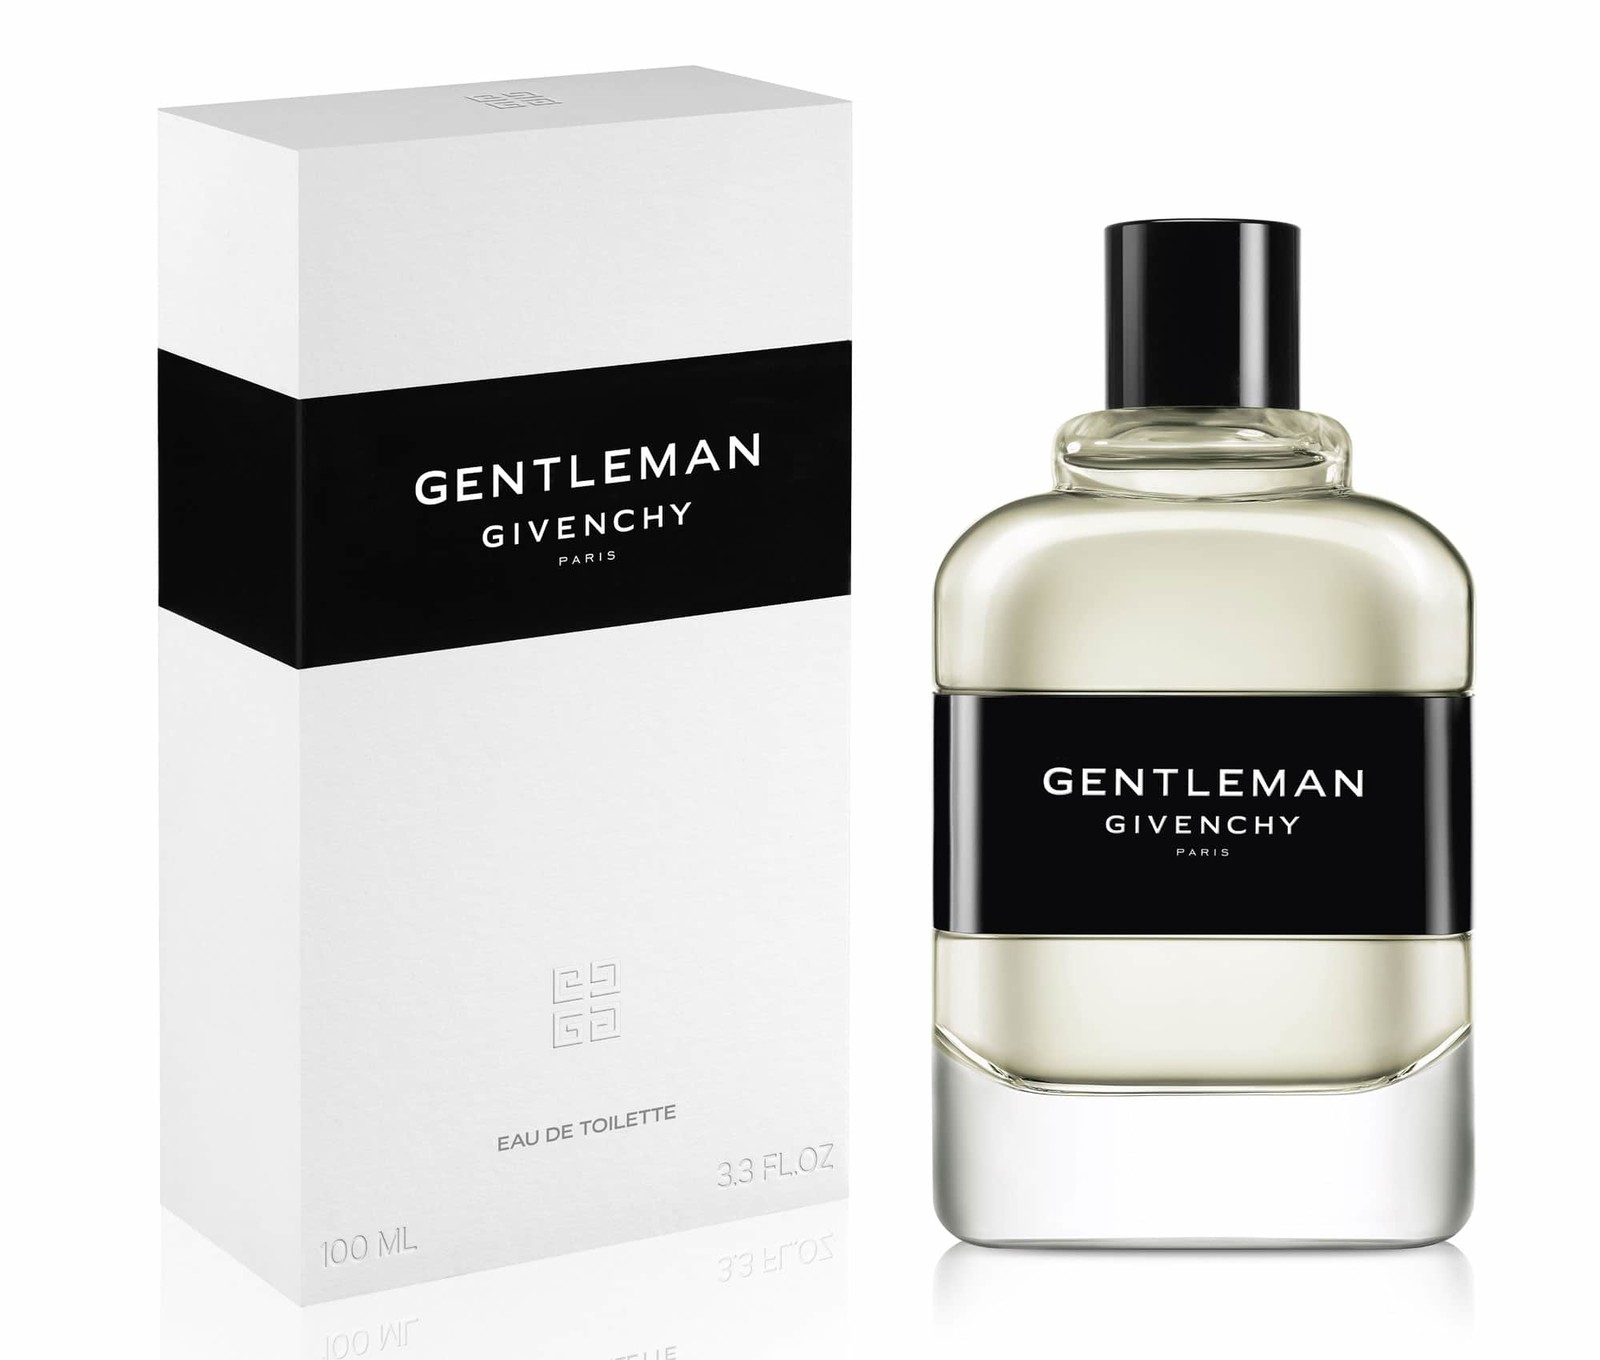 5- Gentleman Givenchy